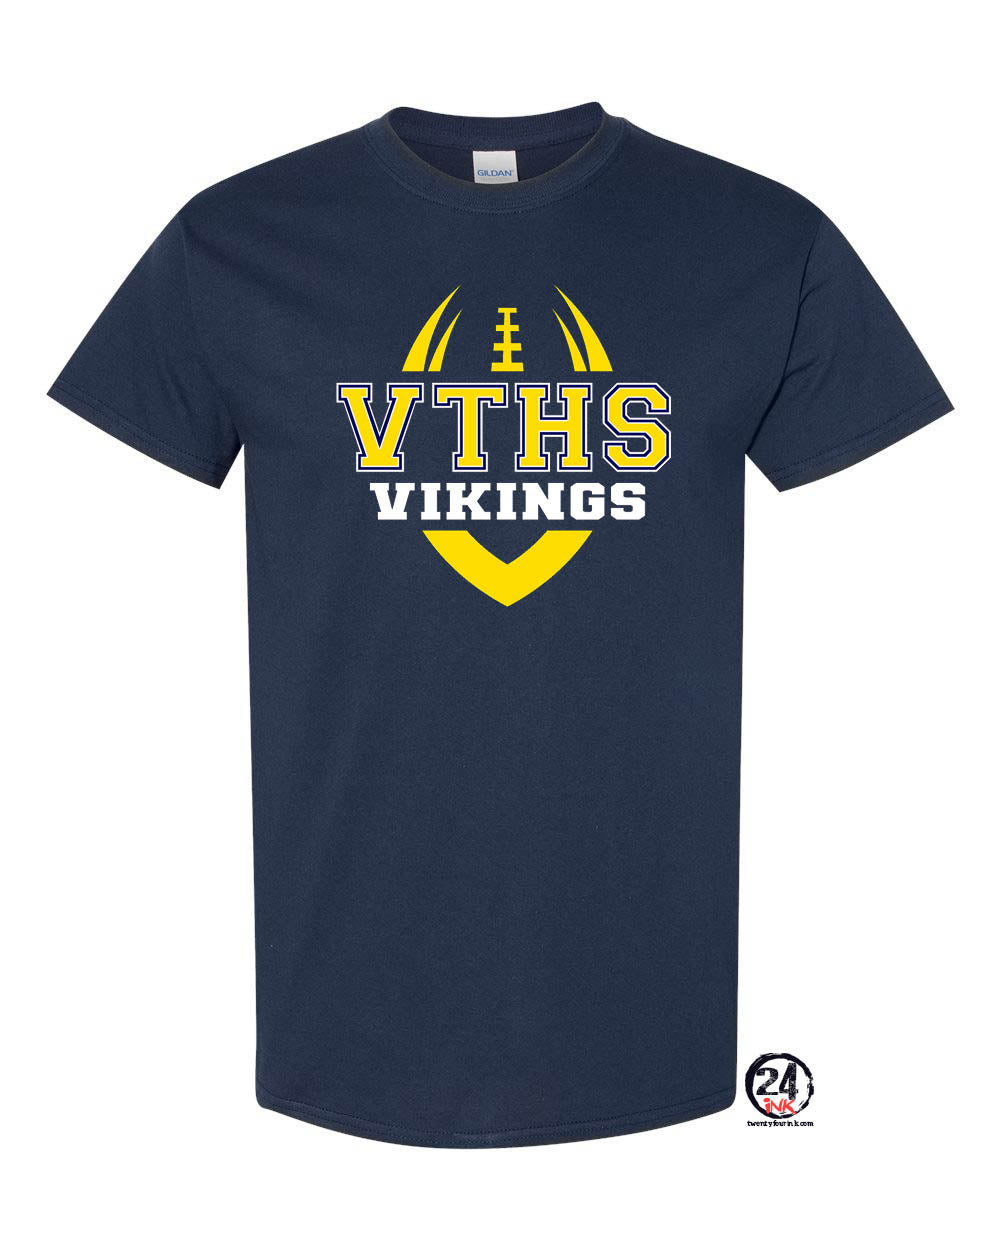 Vernon Football Design 1 T-Shirt